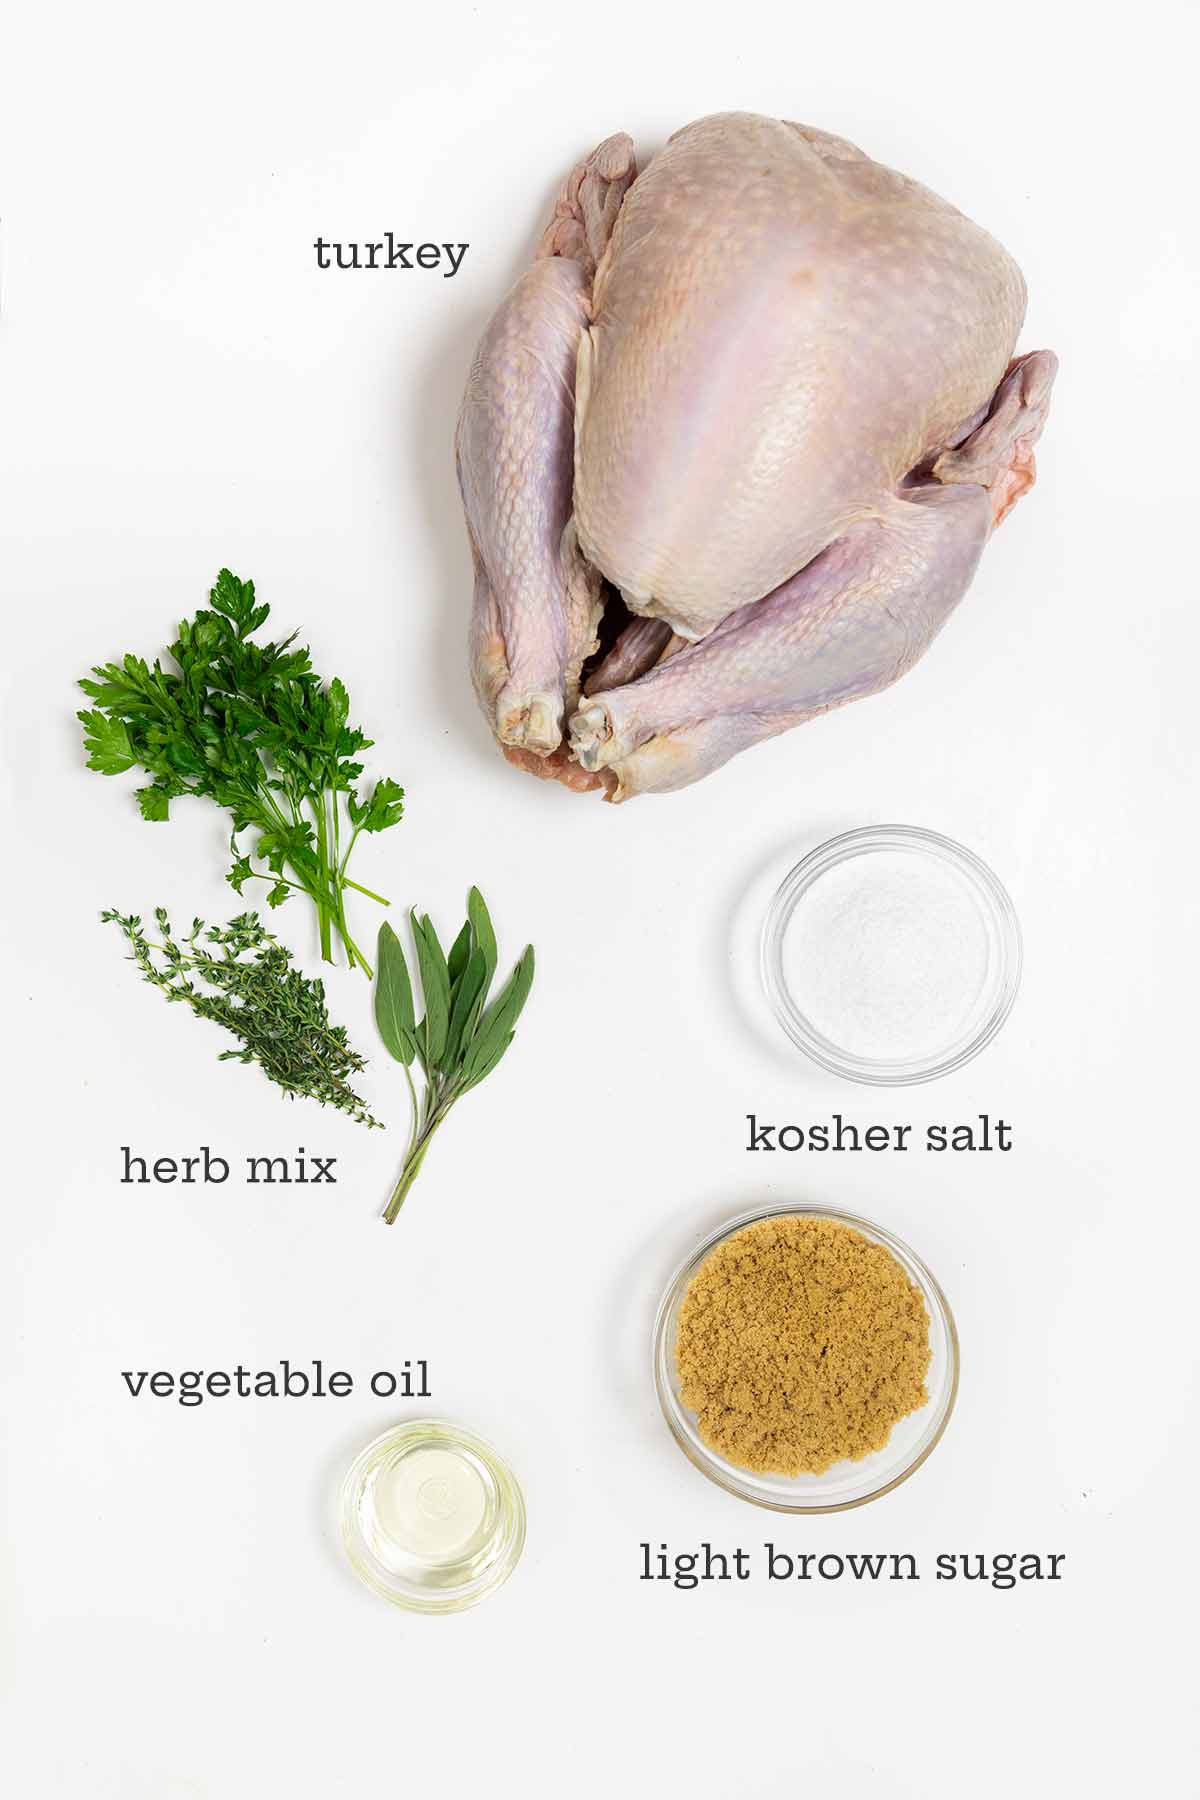 Ingredients for dry brine turkey--turkey, herbs, kosher salt, oil, and brown sugar.